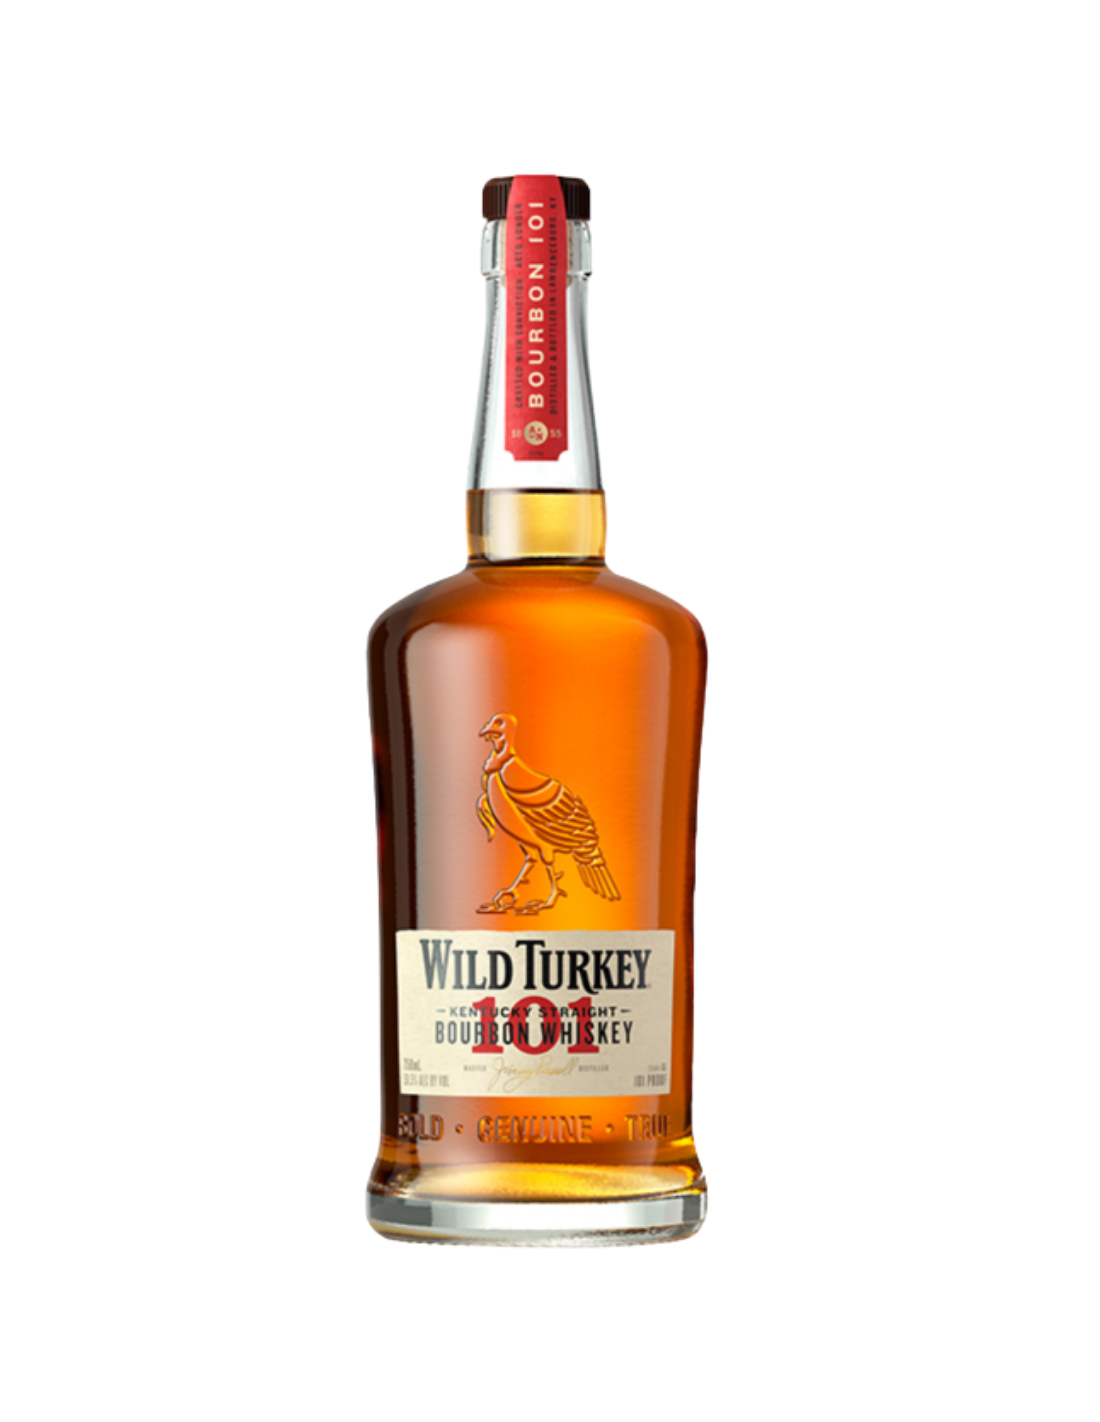 Whisky Wild Turkey 101 Proof, 0.7L, 50.5% alc., SUA alcooldiscount.ro